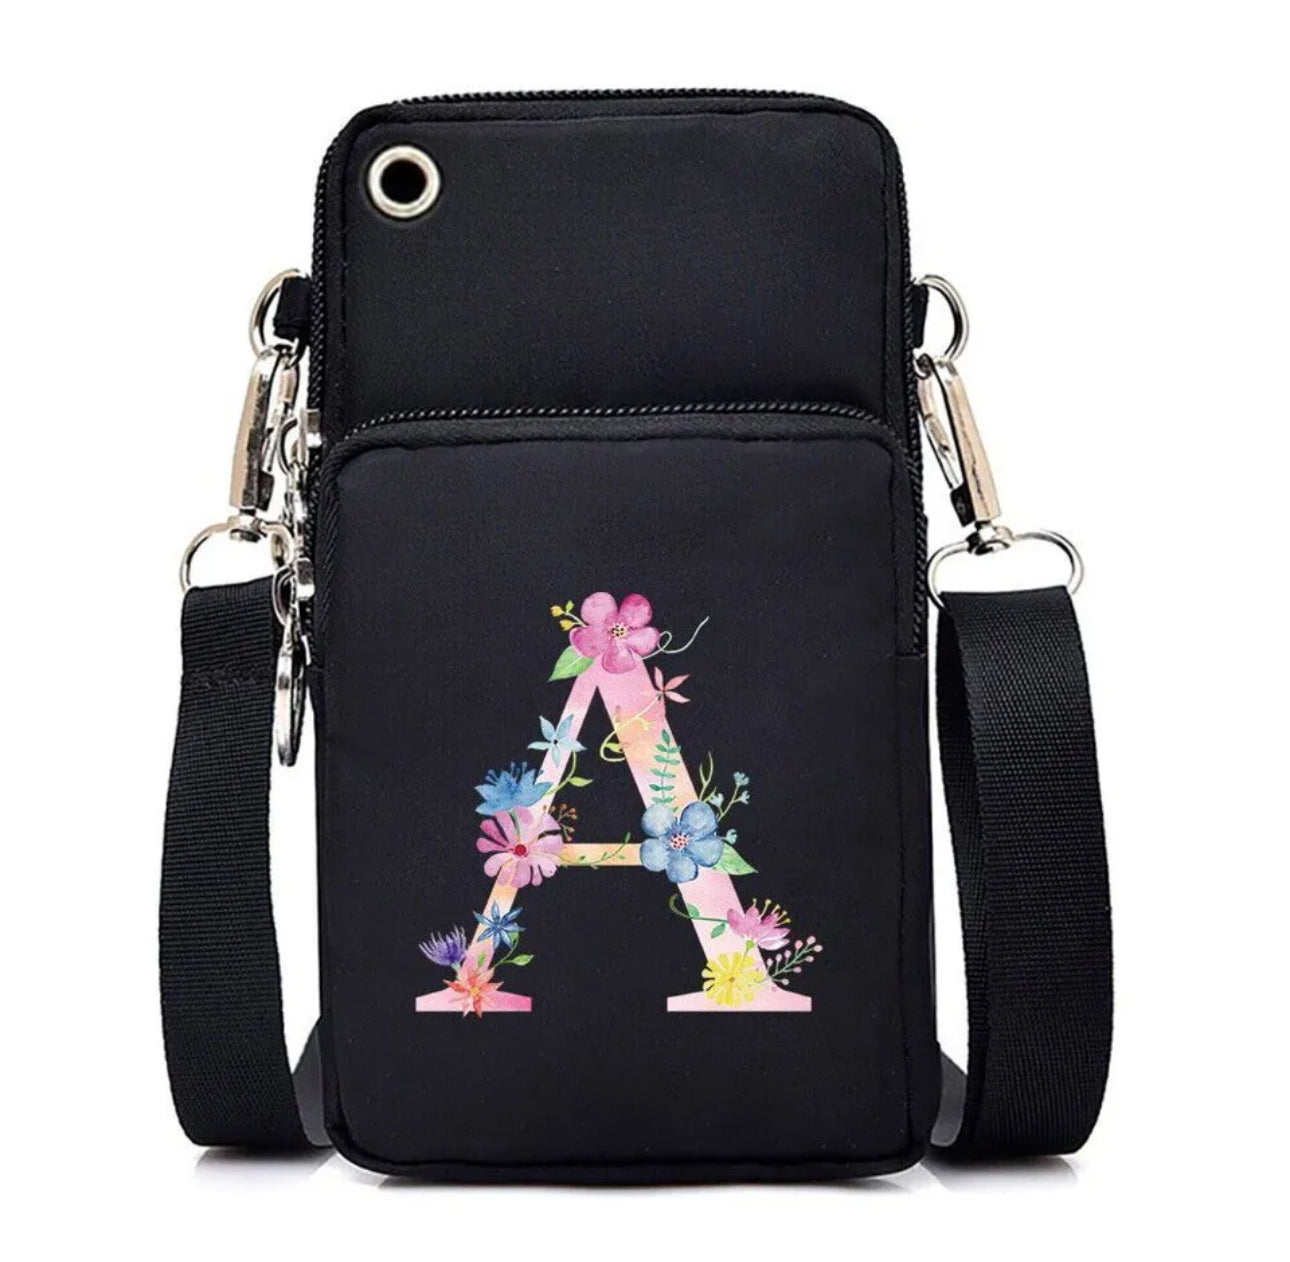 Pin on Handbags, Tote Bags and Shoulder Bags